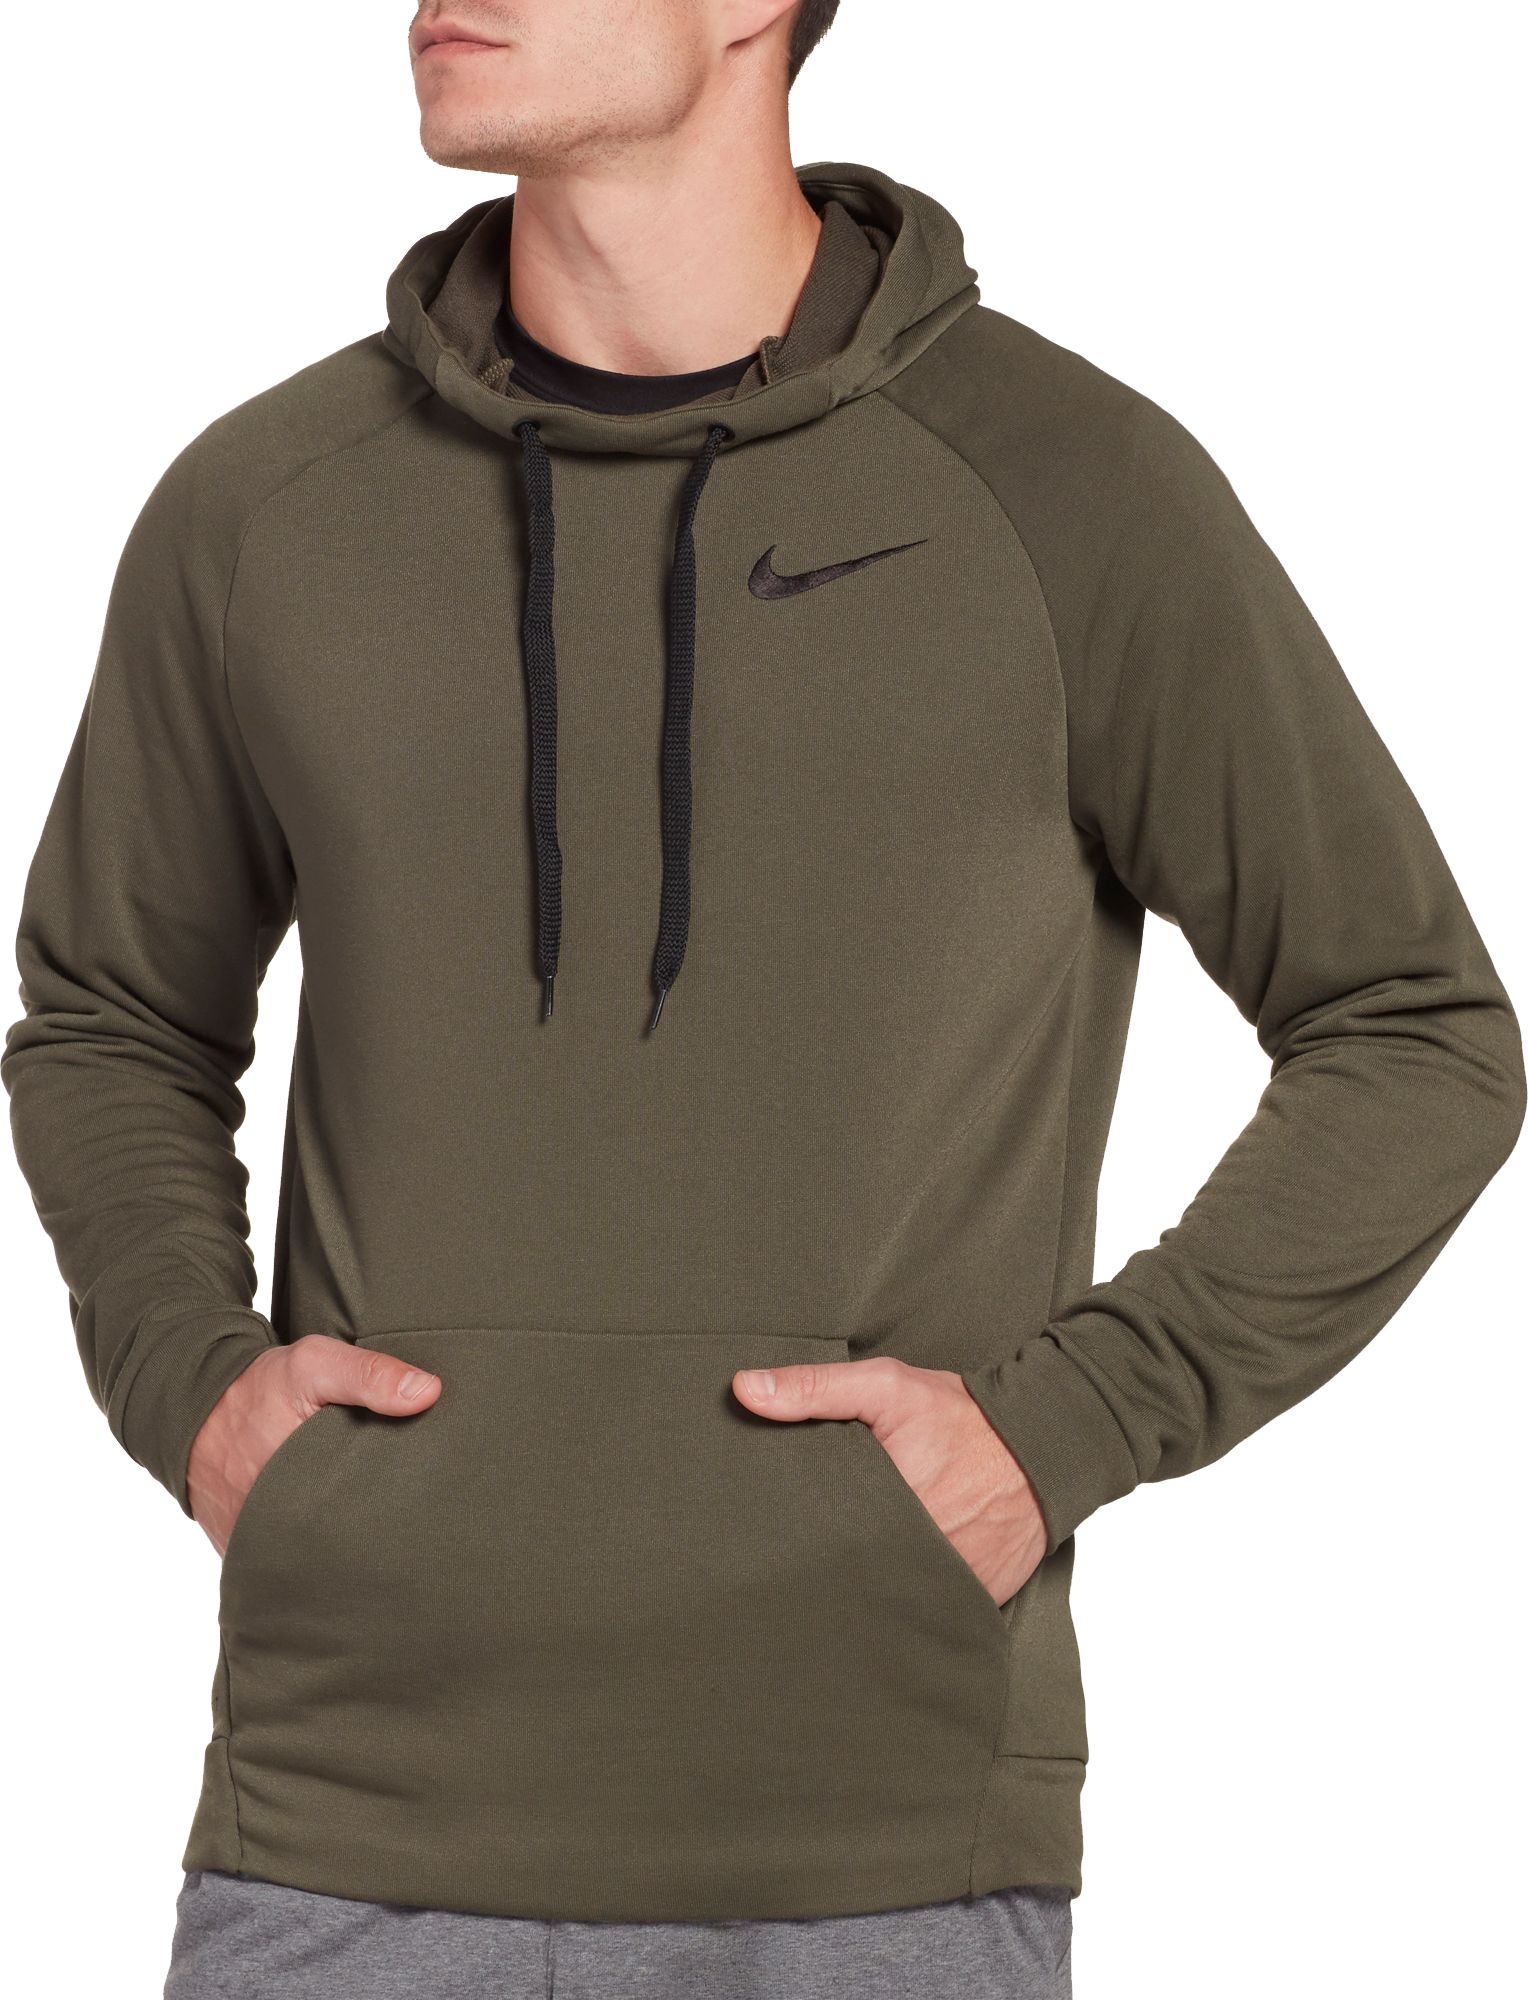 Nike Men's Dry Fleece Hoodie - .97 - .97